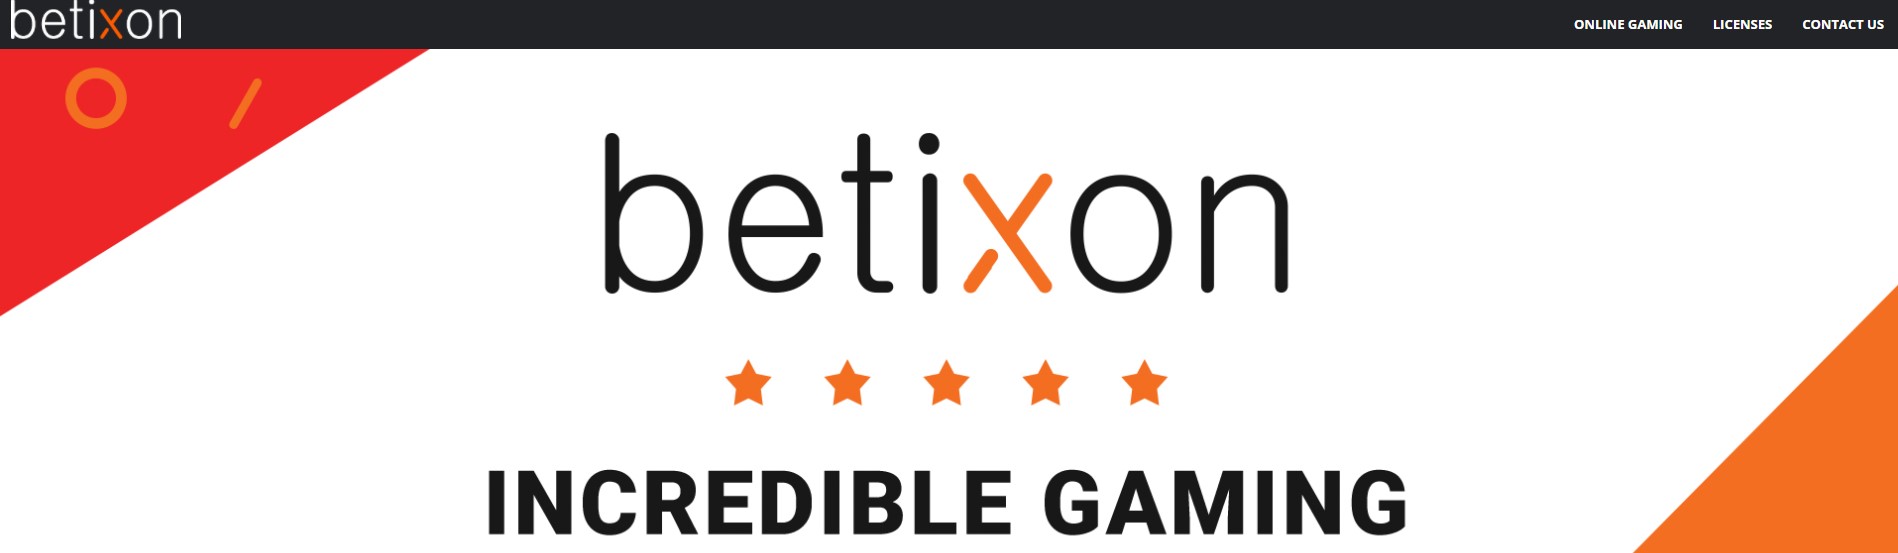 Betixon brands new UK Gambling license